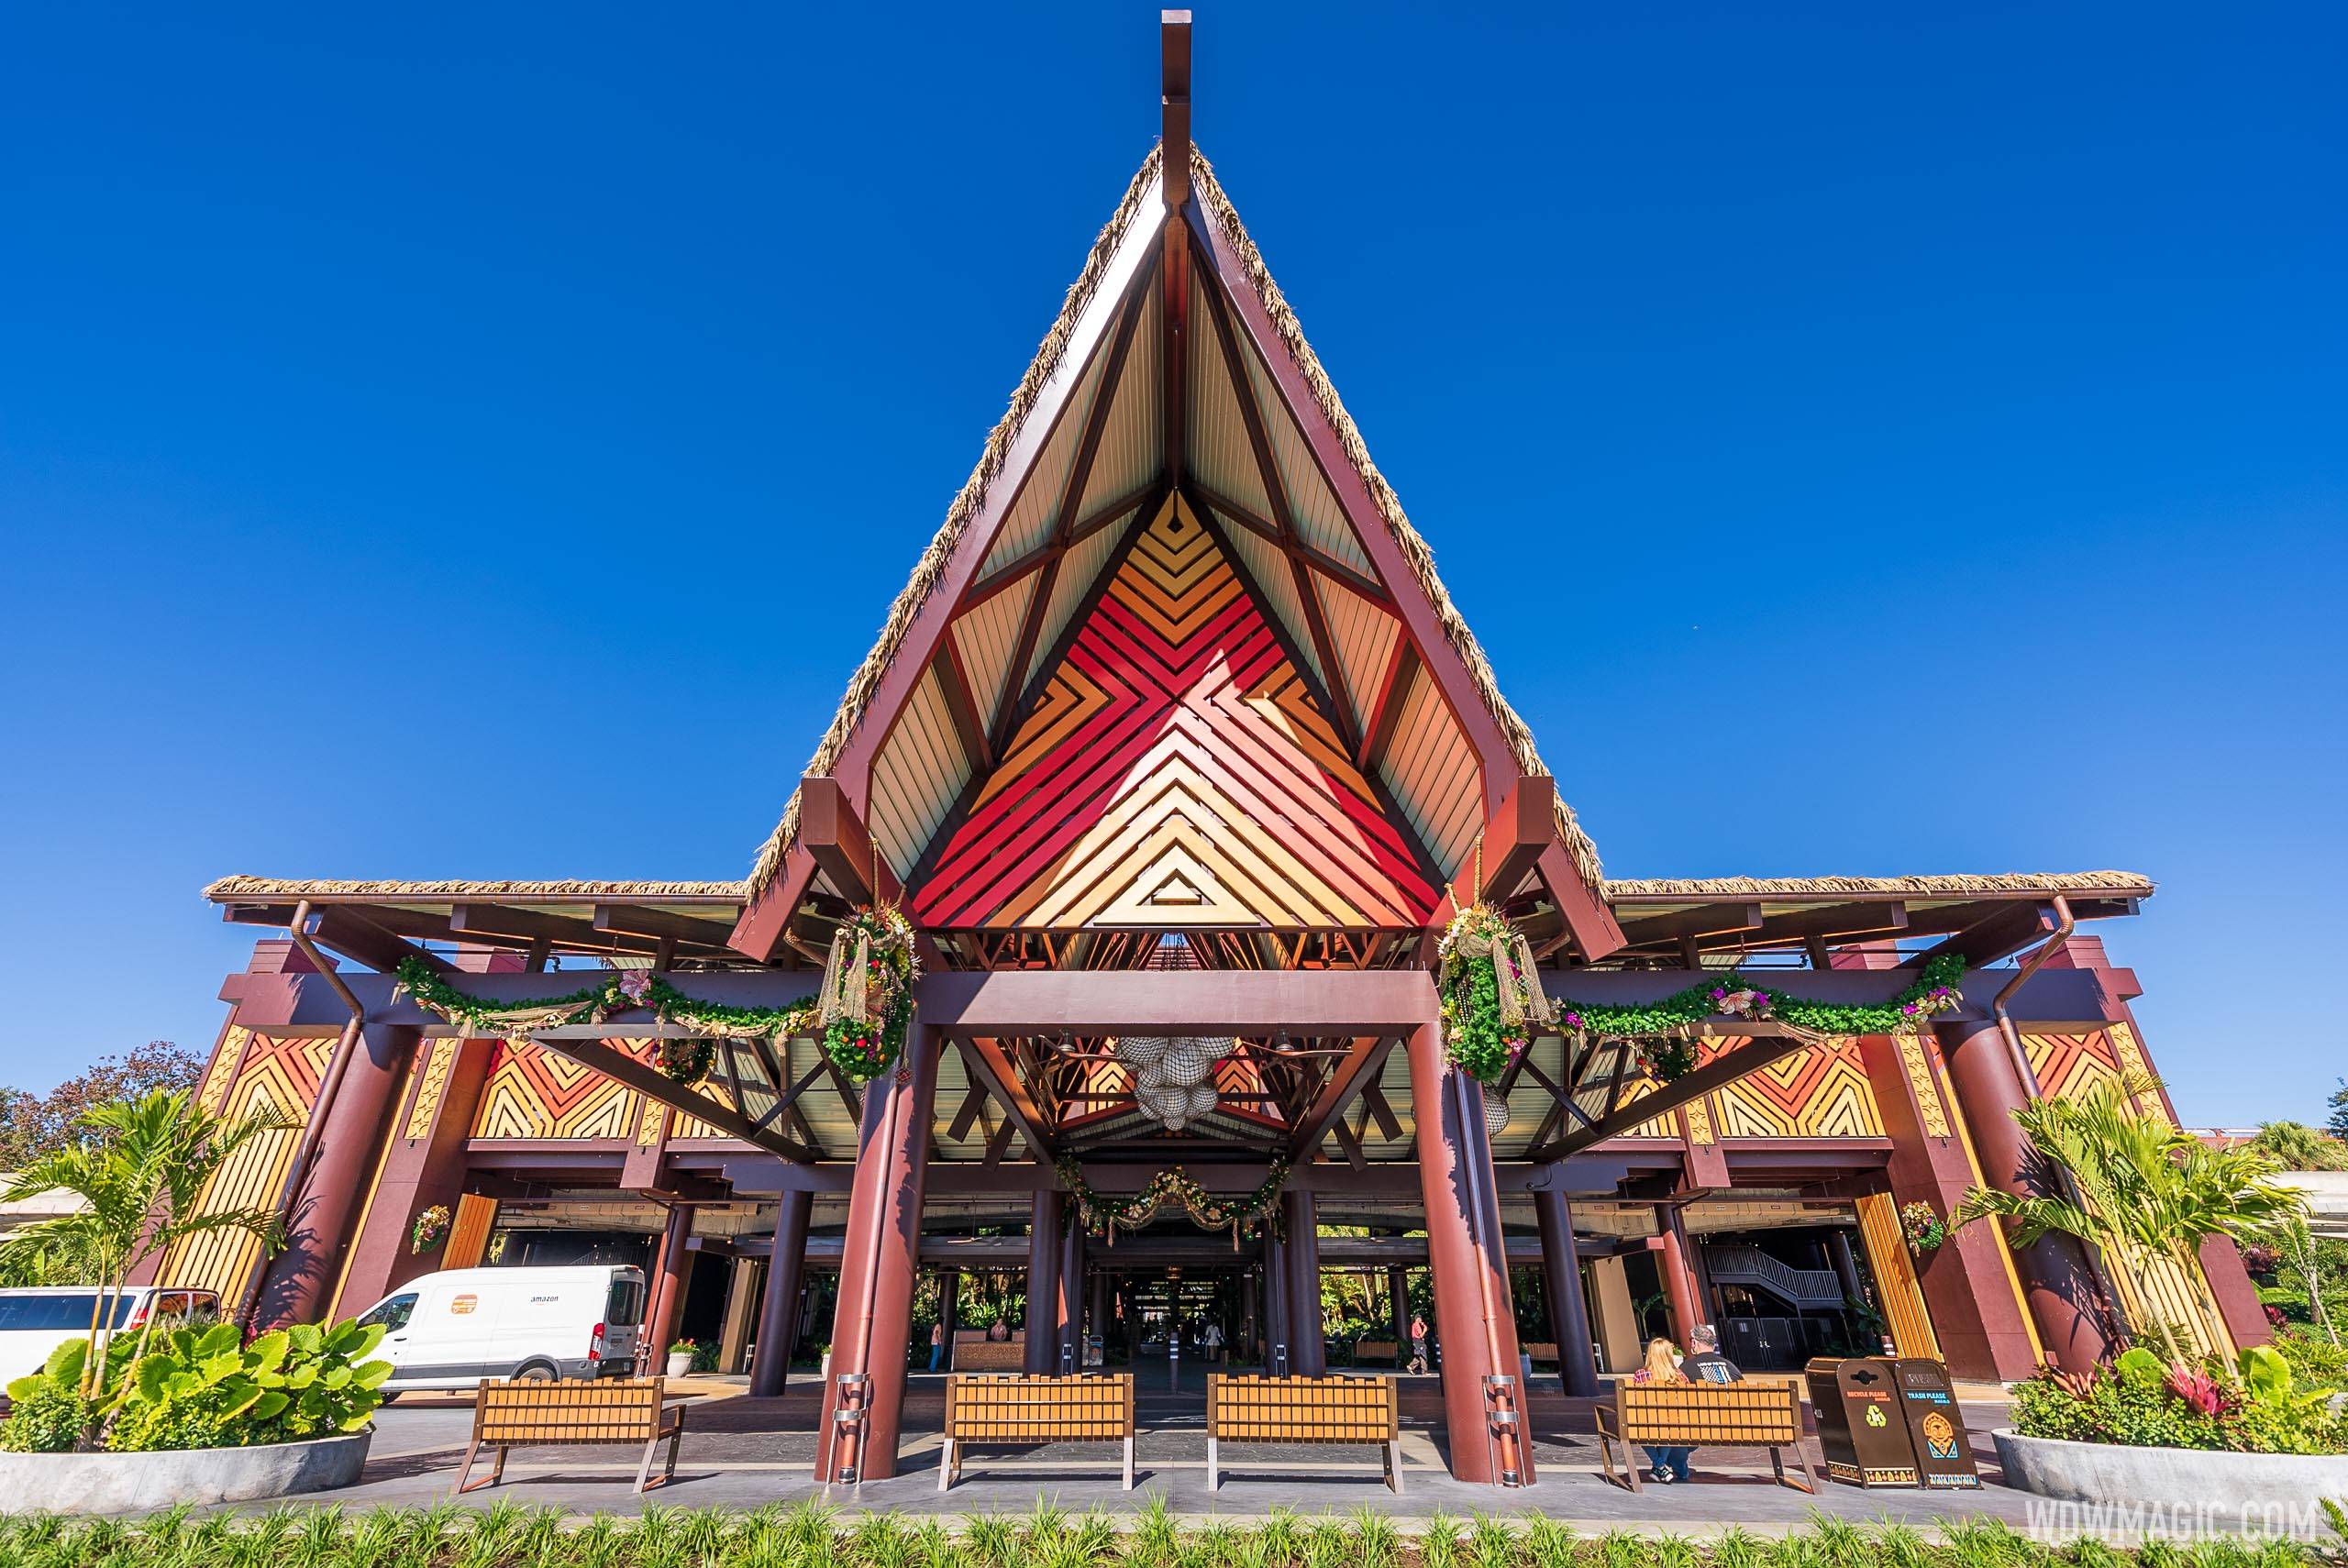 New main entrance holiday decor at Disney's Polynesian Village Resort